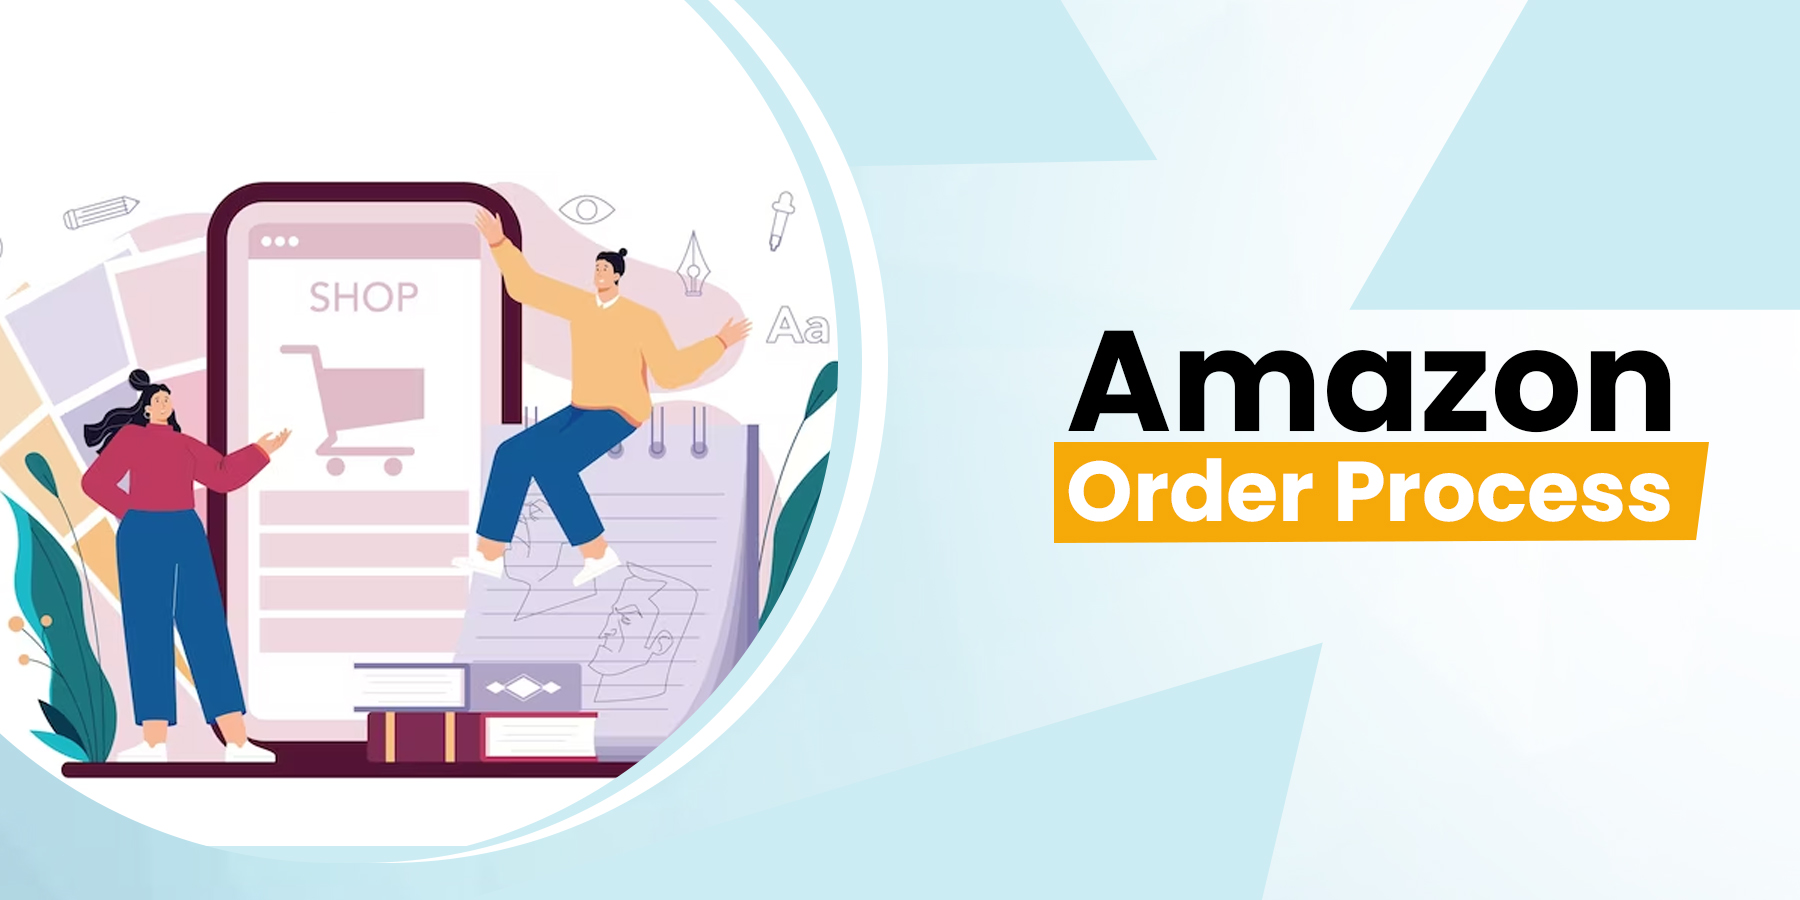 Amazon Order Process